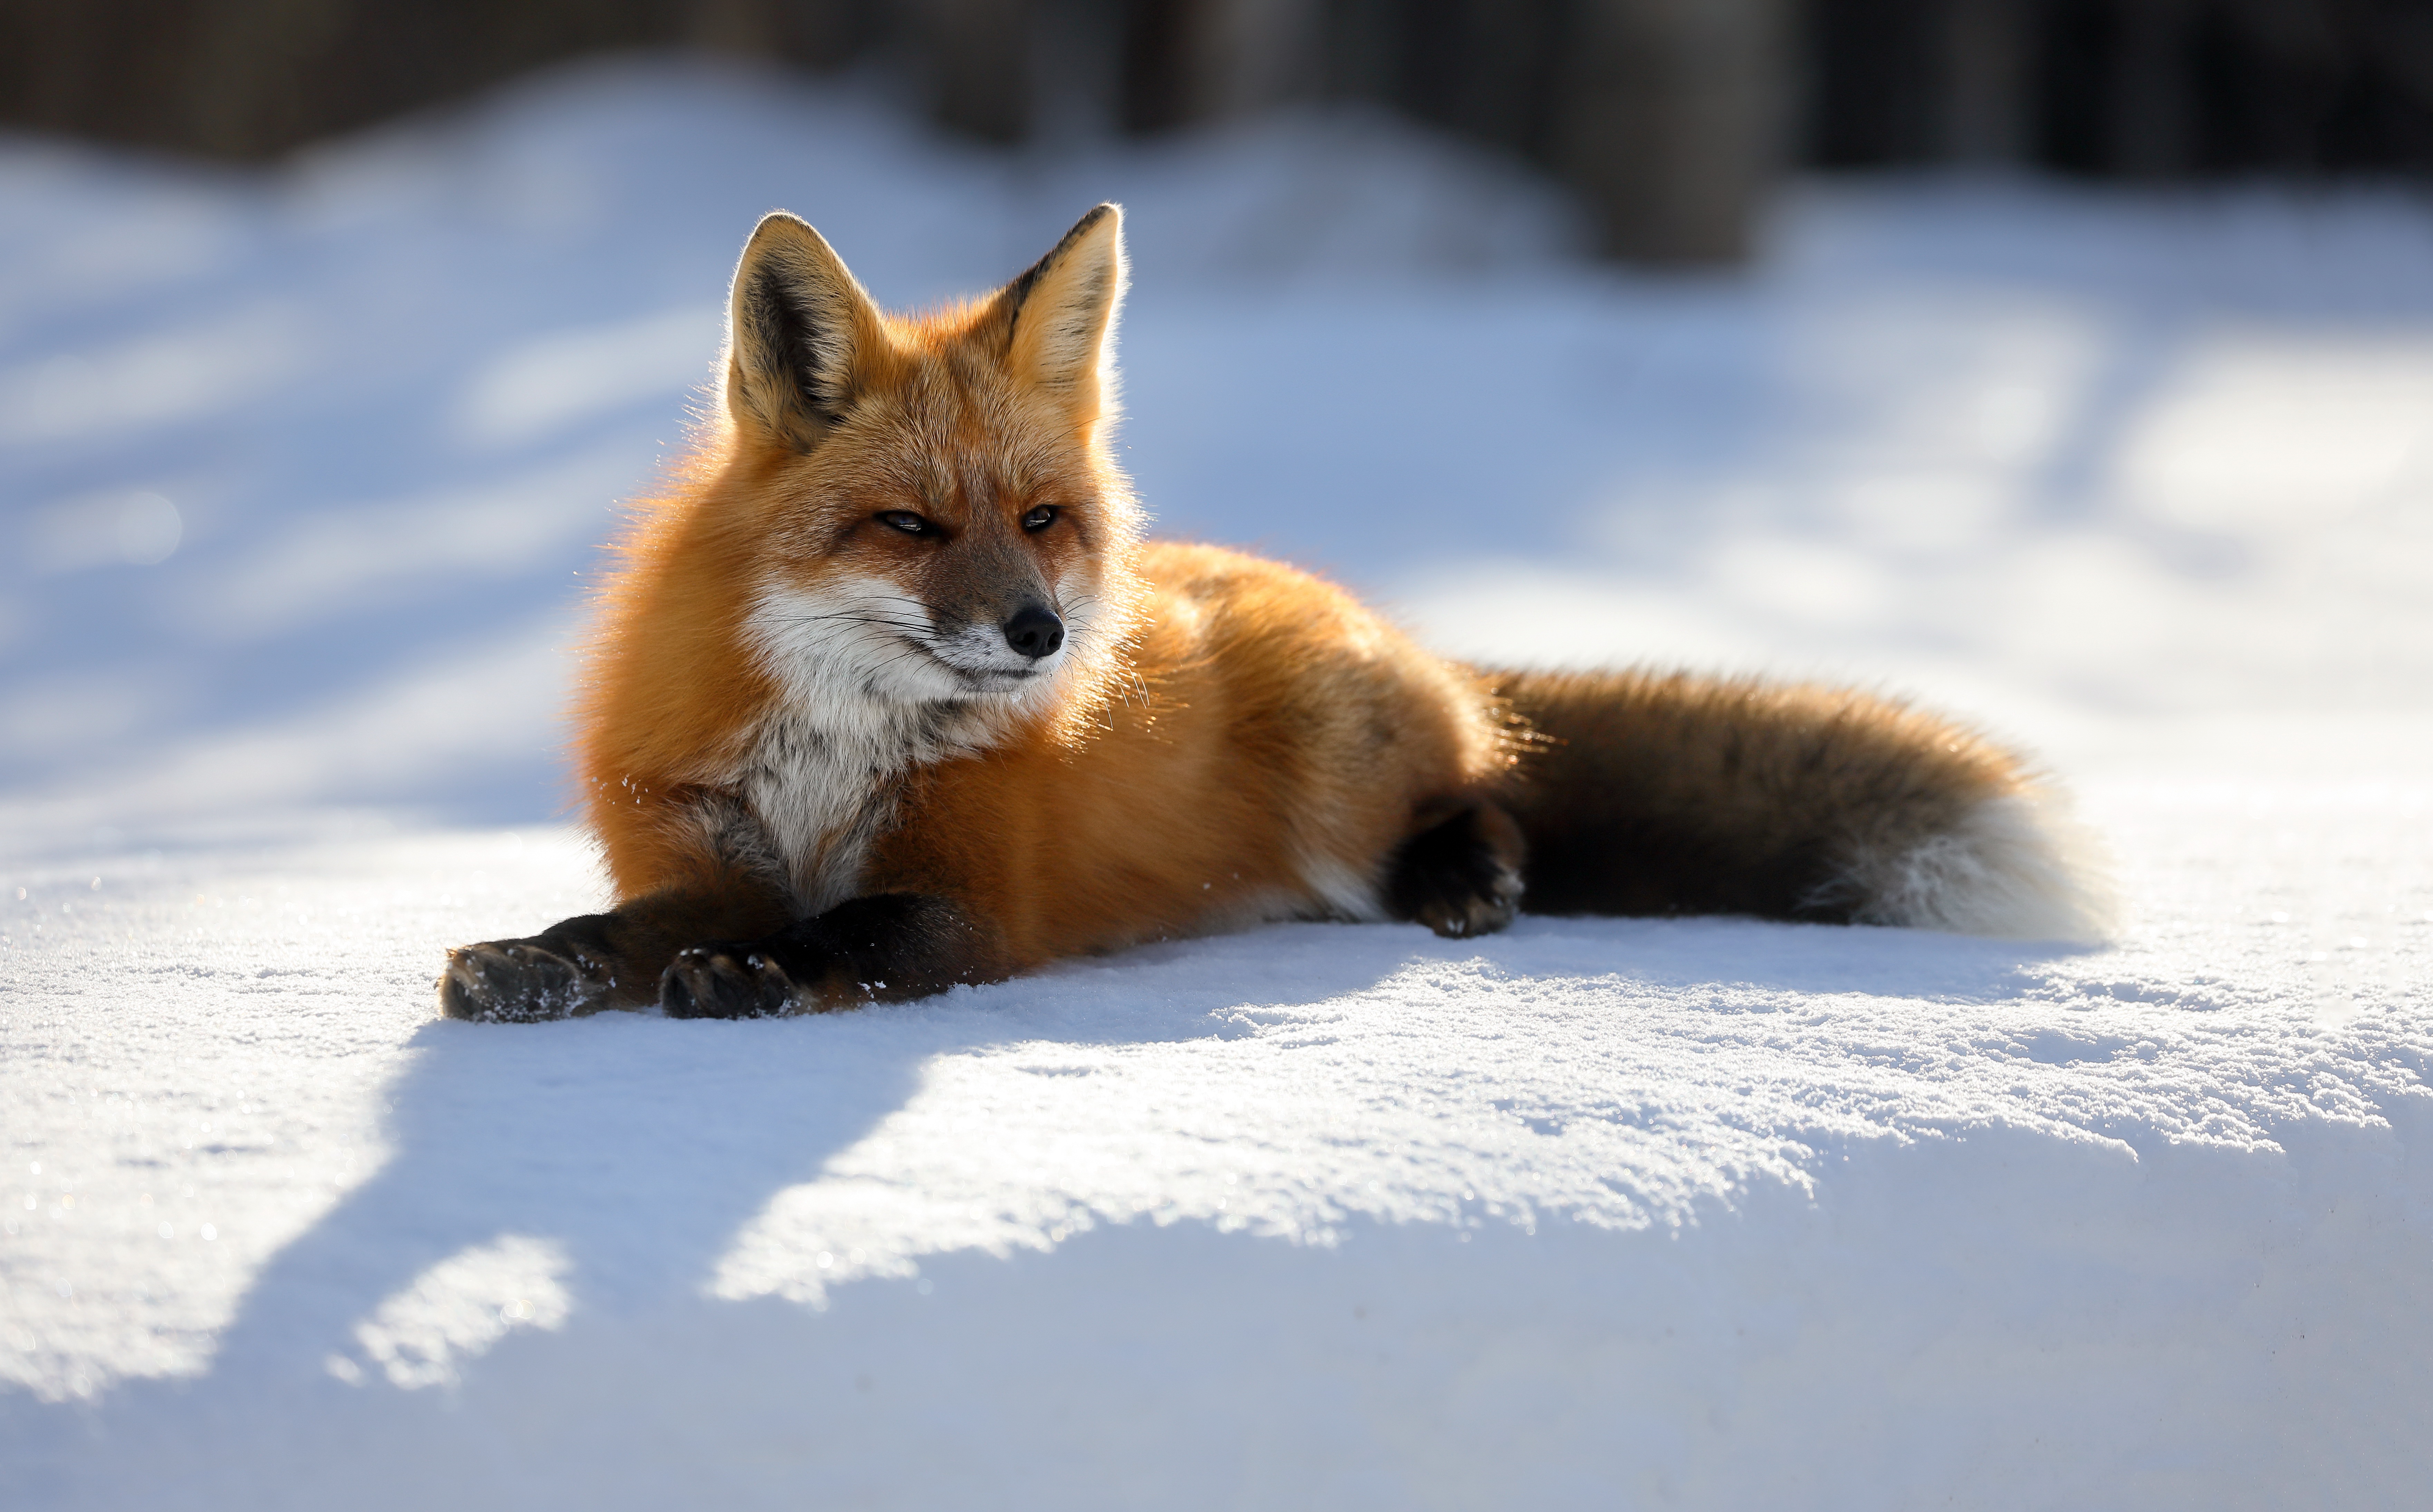 Renard Fox